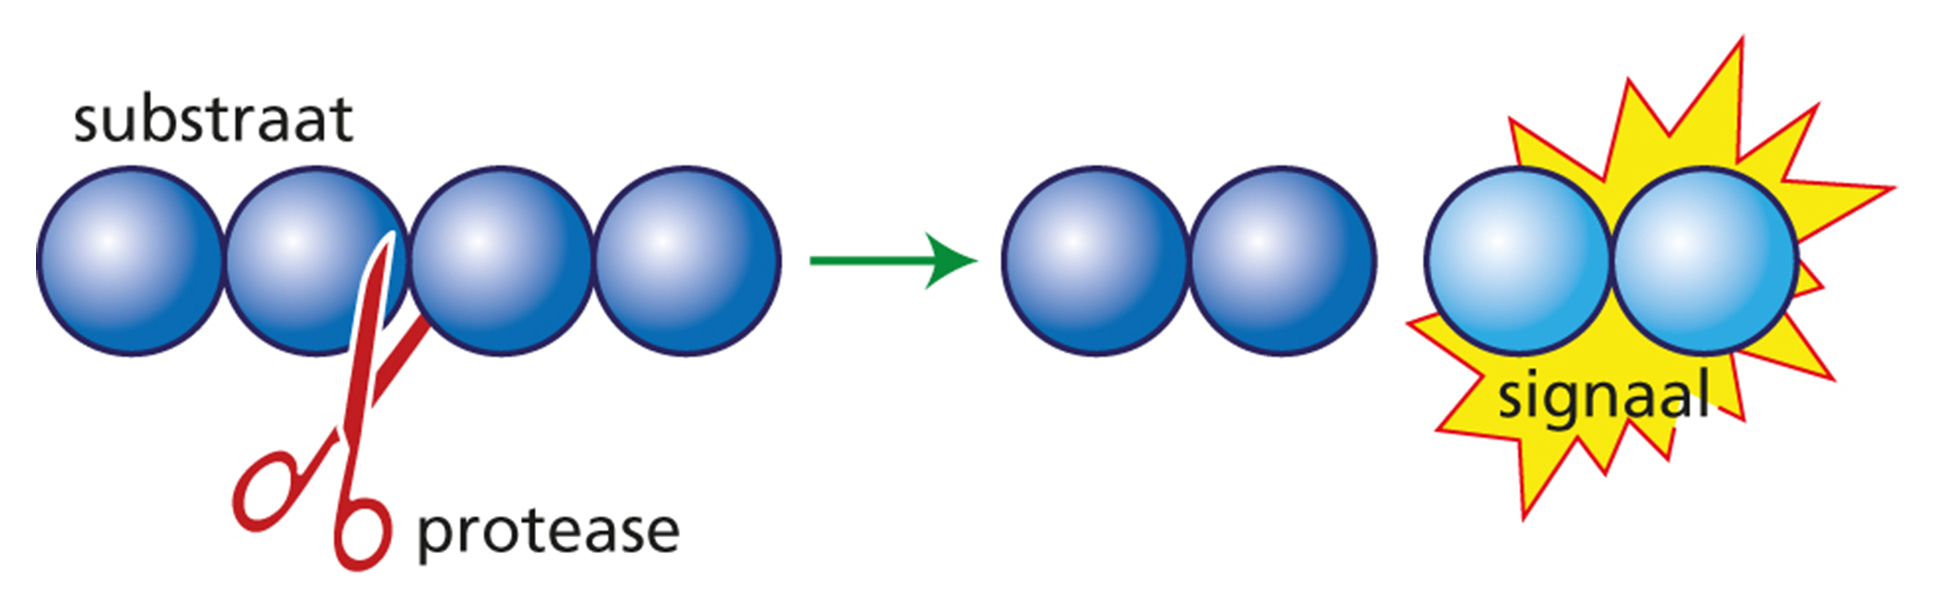 protease-substraatinteractie